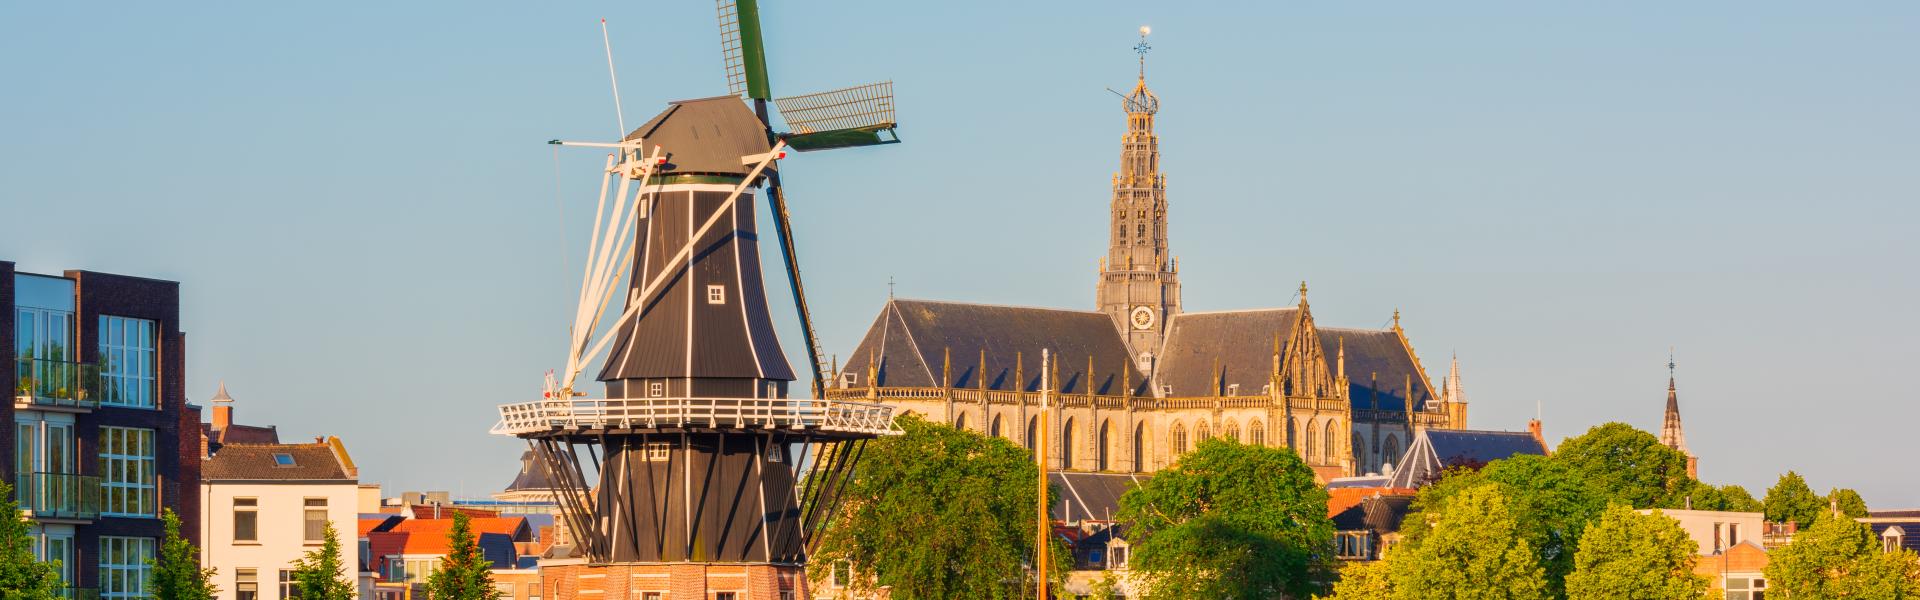 Skyline of Haarlem, North Holland, Netherlands around sunrise, with Windmill "De Adriaan" from 1779 and 13th Century Saint Bavo Church. The Spaarne river flows through Haarlem.